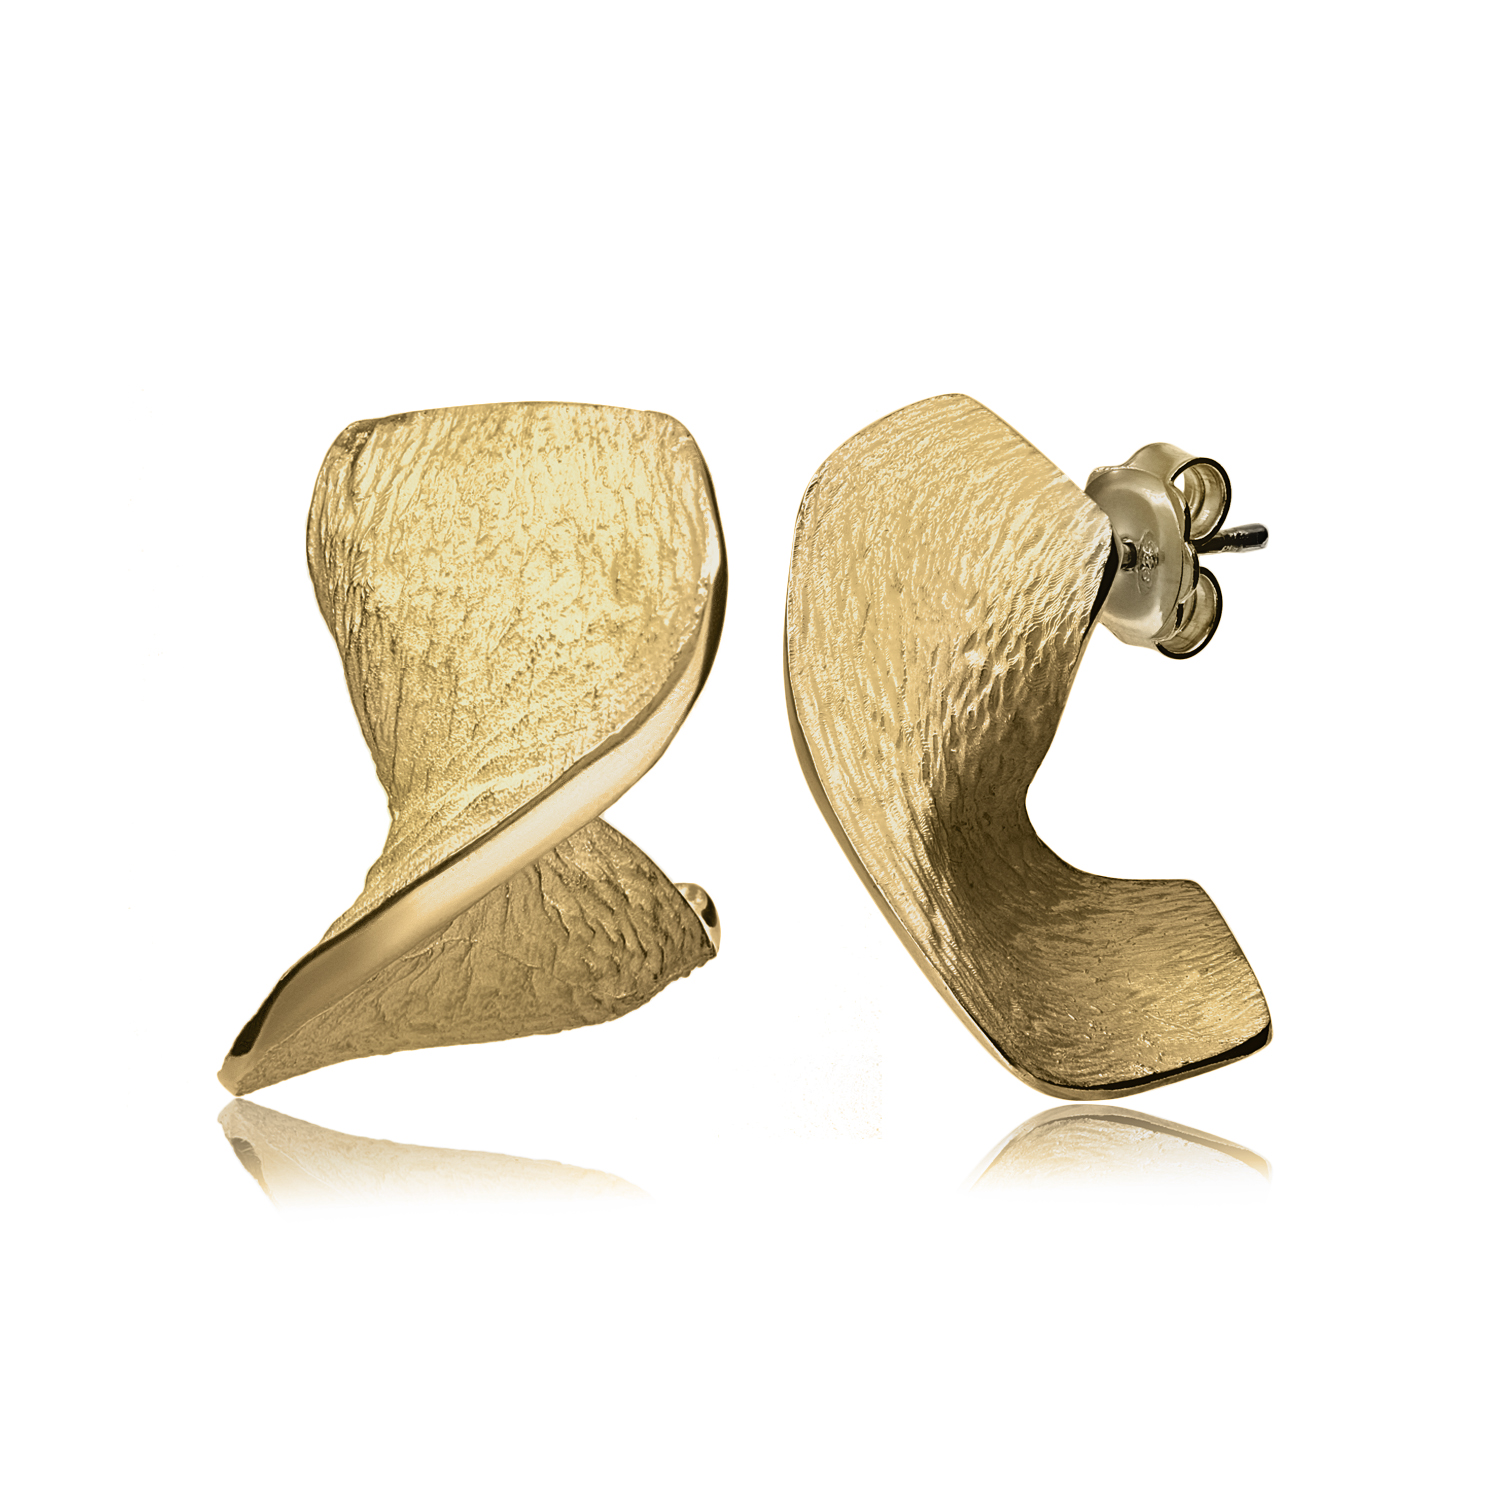 Goldplated Encenalls earrings